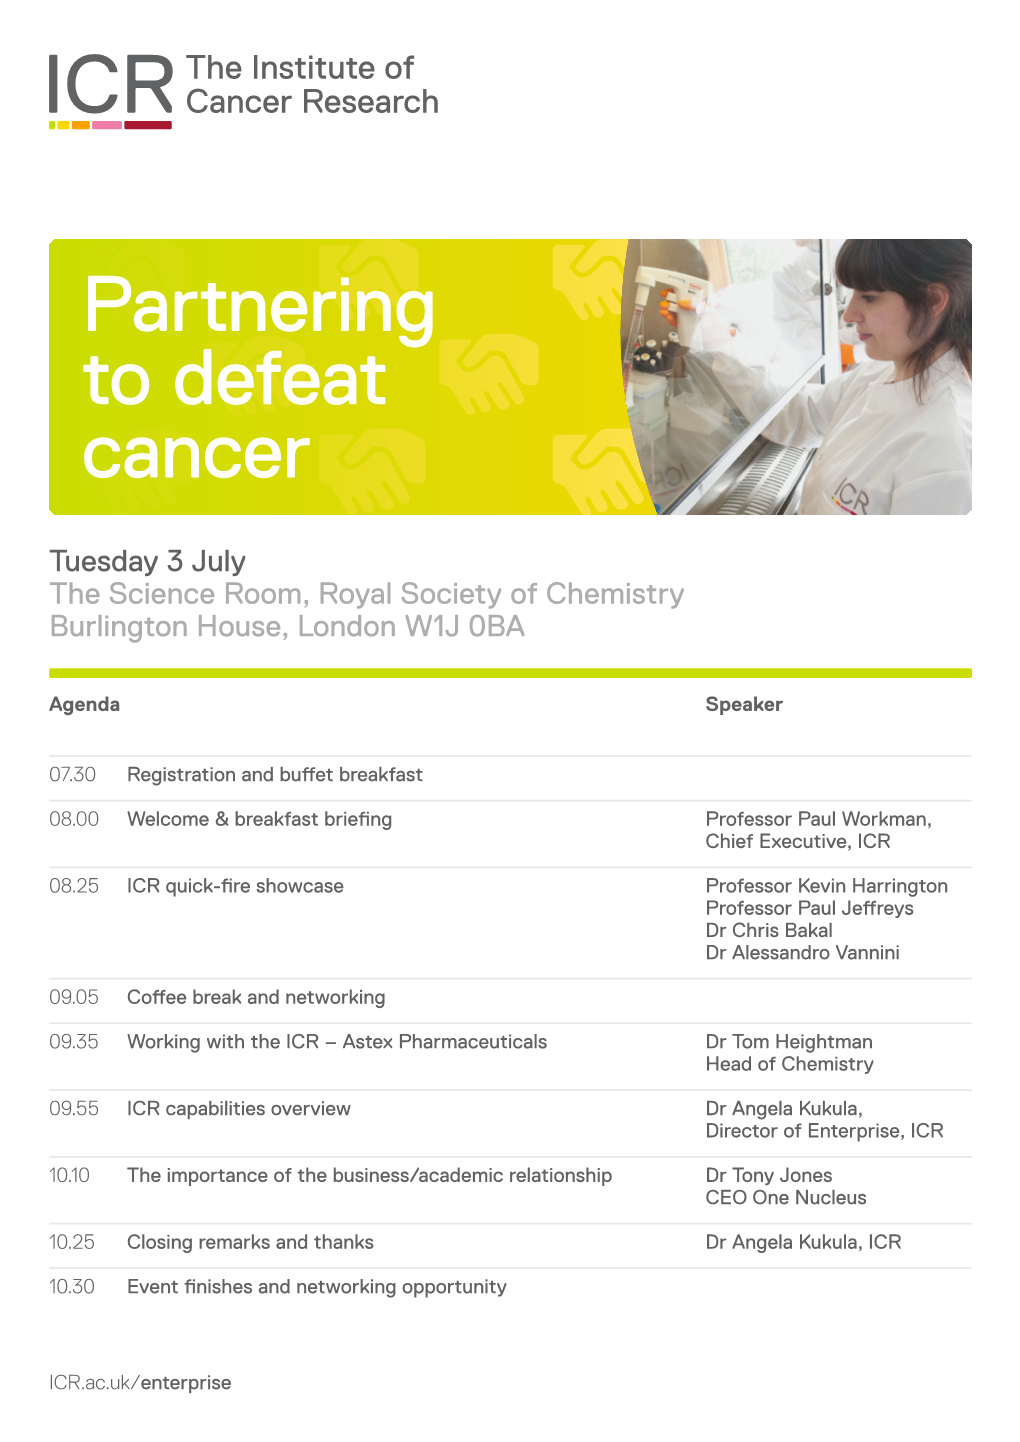 Tuesday 3 July the Science Room, Royal Society of Chemistry Burlington House, London W1J 0BA